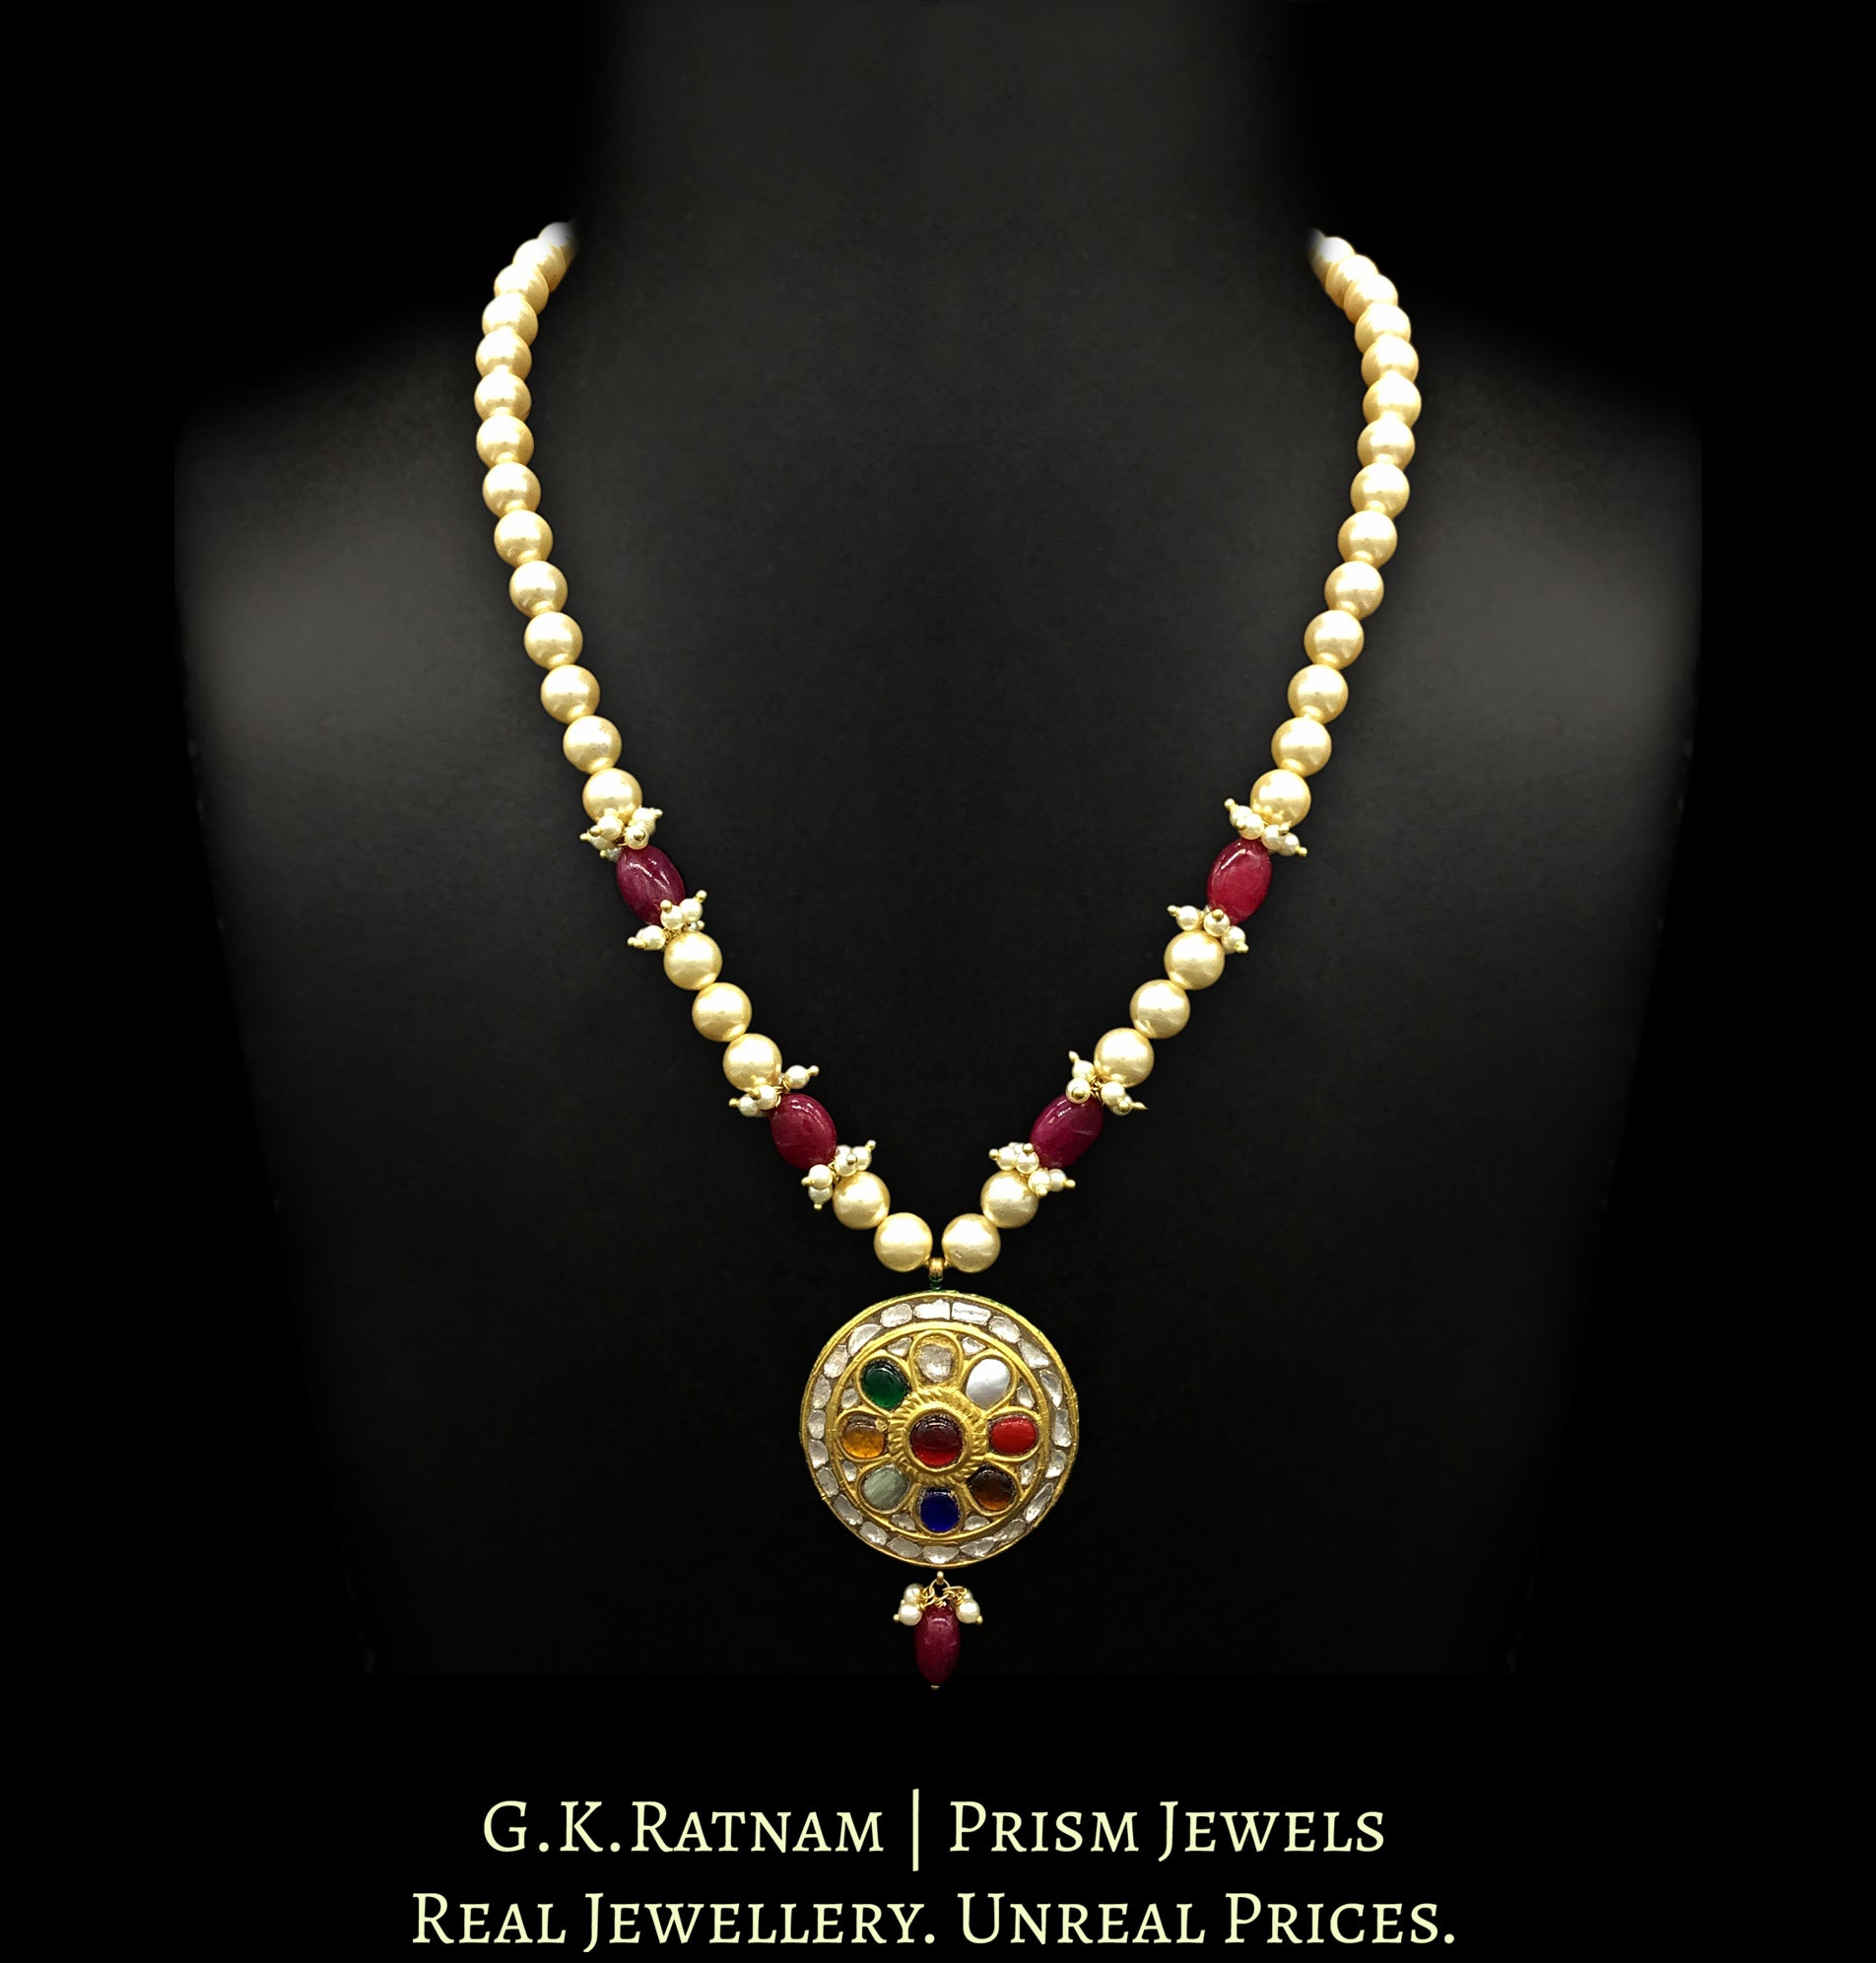 23k Gold and Diamond Polki Round Navratna Pendant with pearls and rubies - G. K. Ratnam